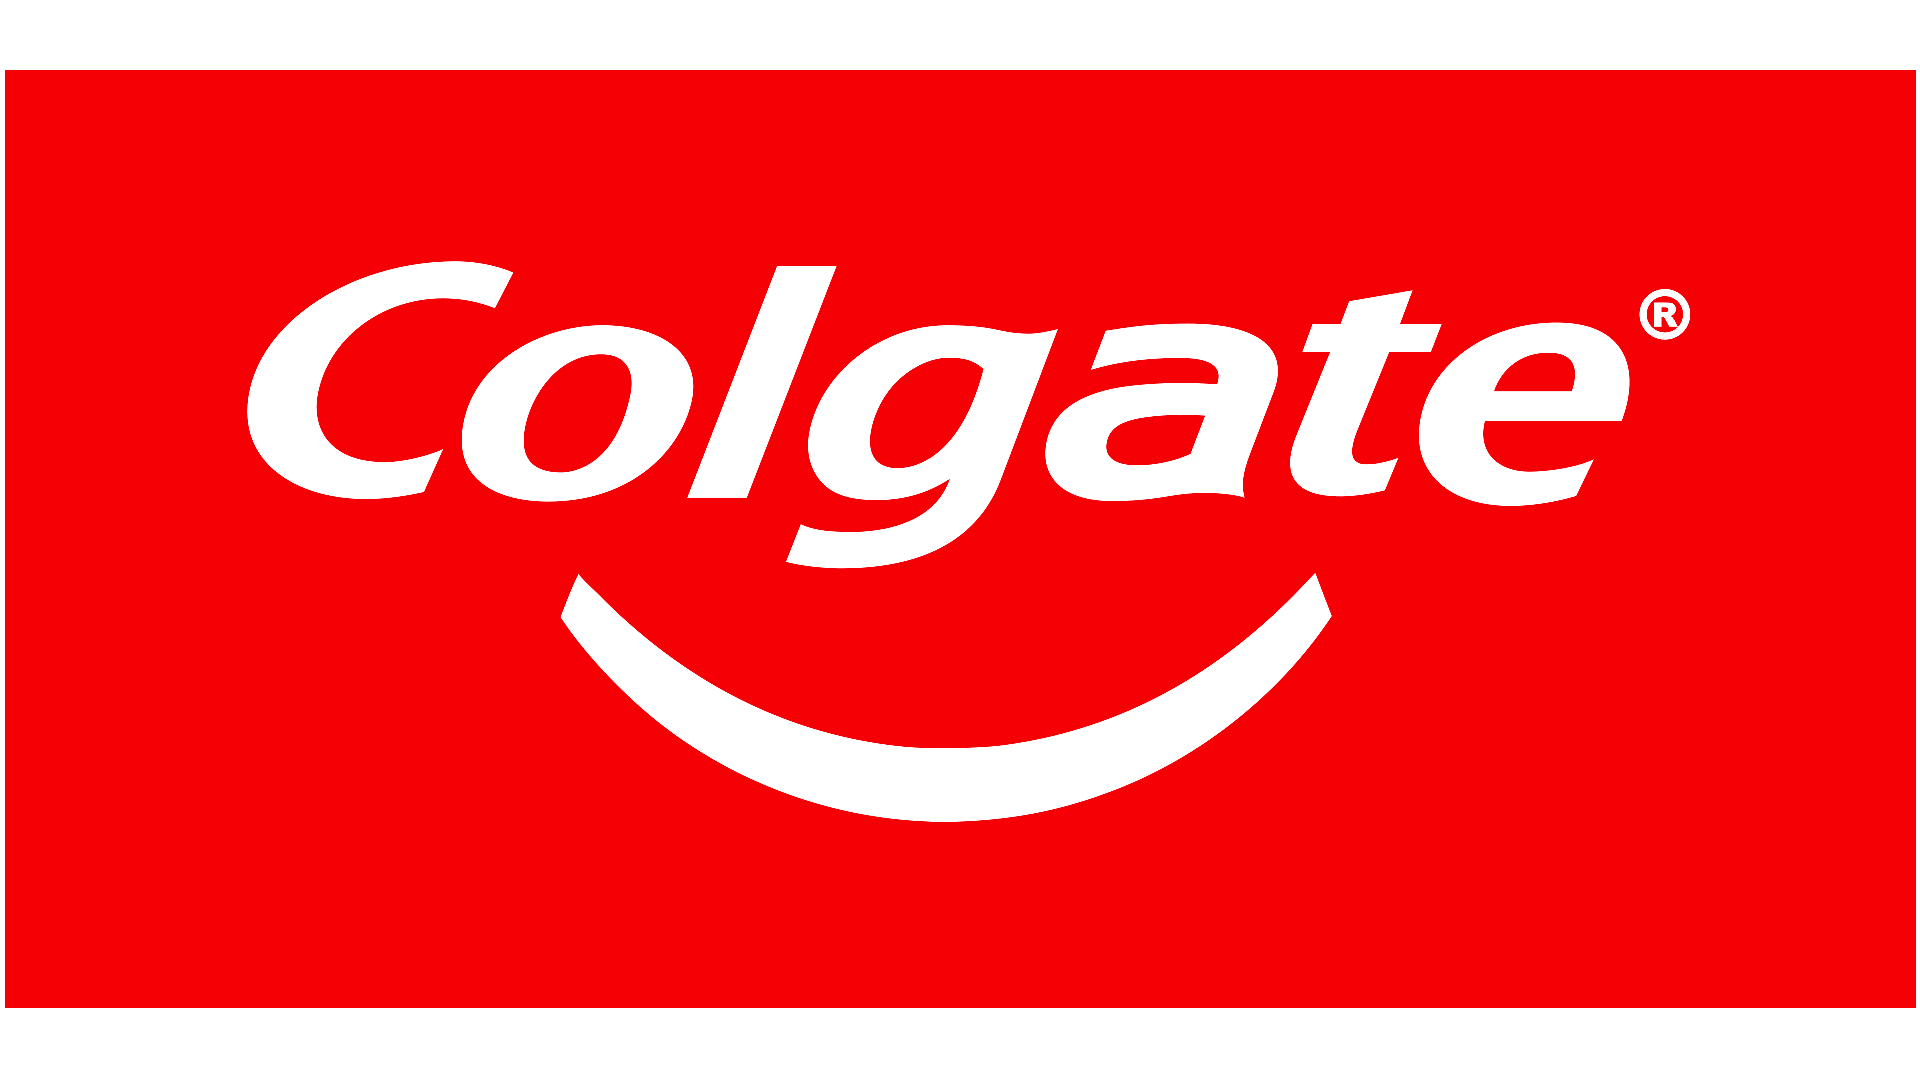 Brand: Colgate